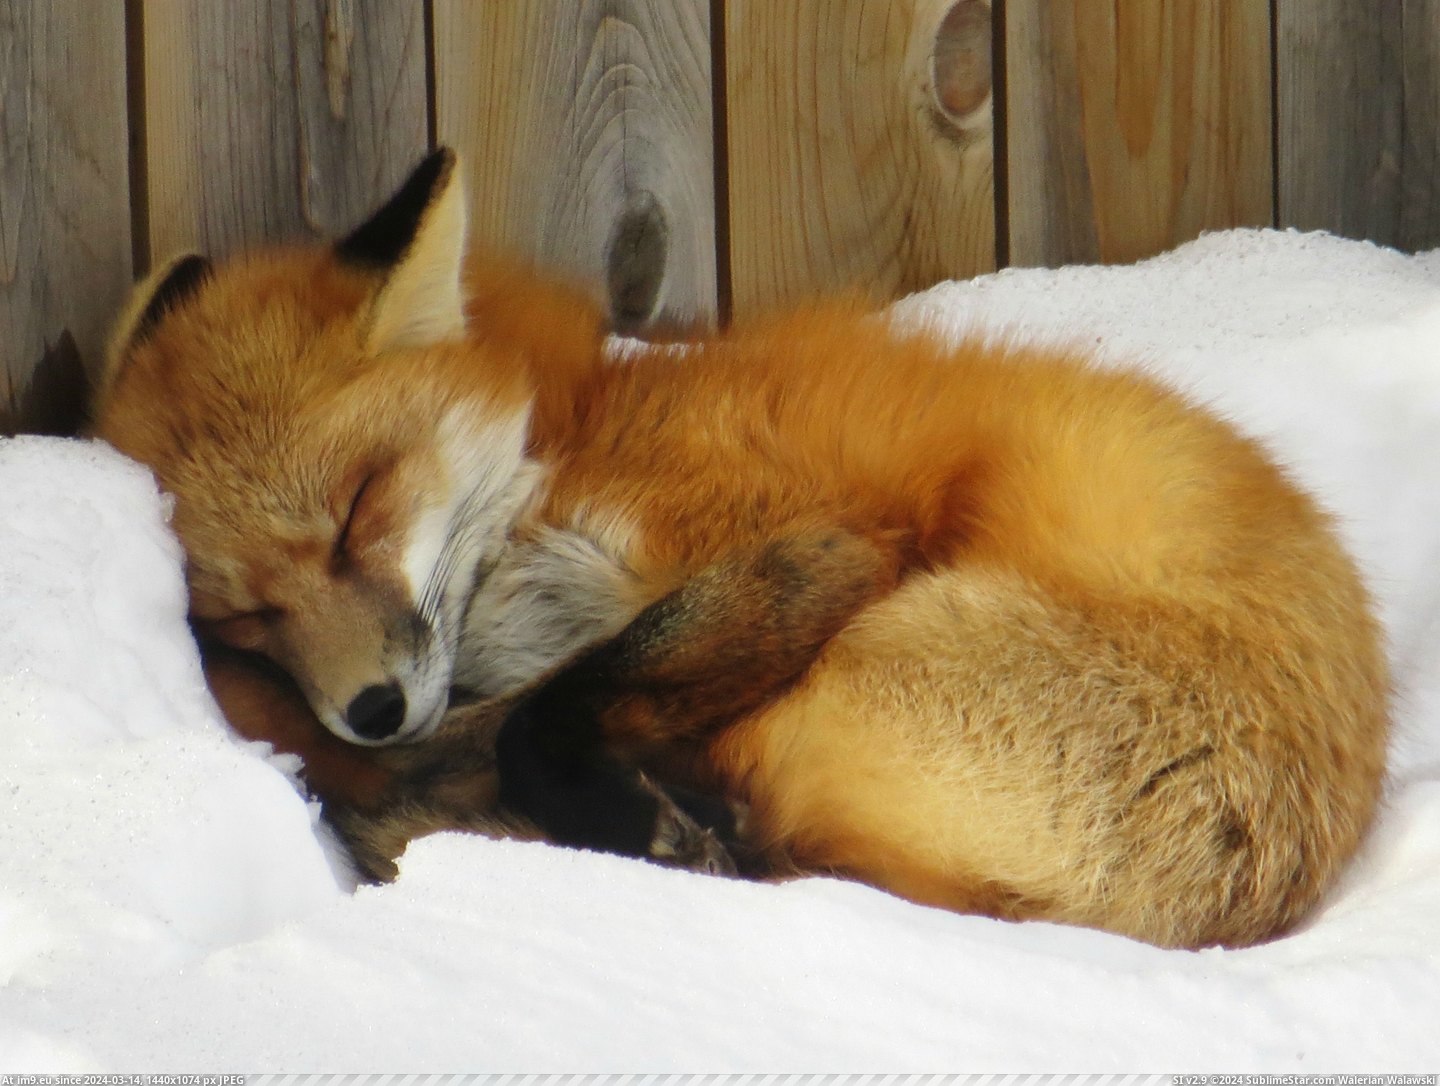 #Red #Canada #Alberta #Backyard #Fox #Sleeping [Pics] Red fox sleeping in my backyard! Alberta, Canada. 1 Pic. (Изображение из альбом My r/PICS favs))